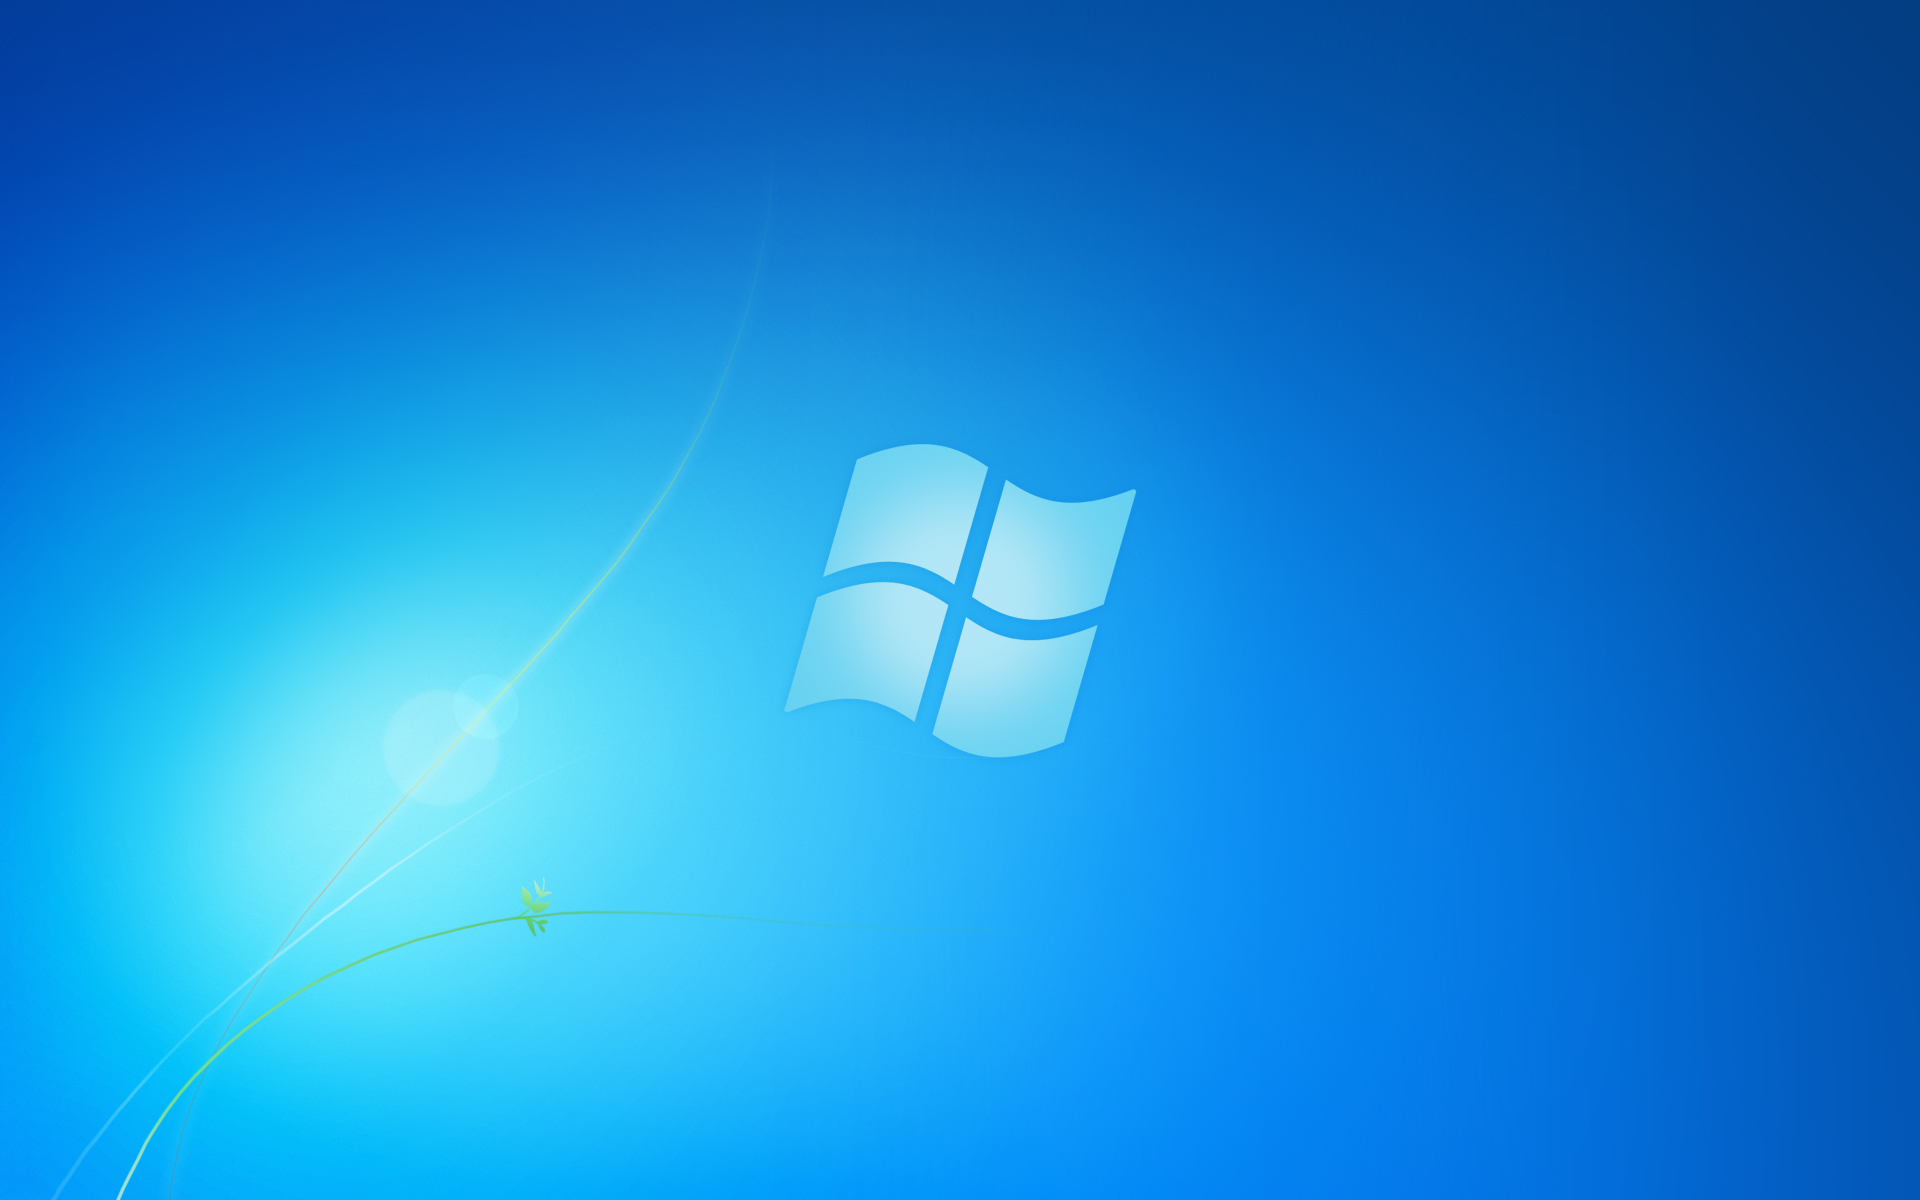 Windows 7 sovrasta Windows 10, ancora